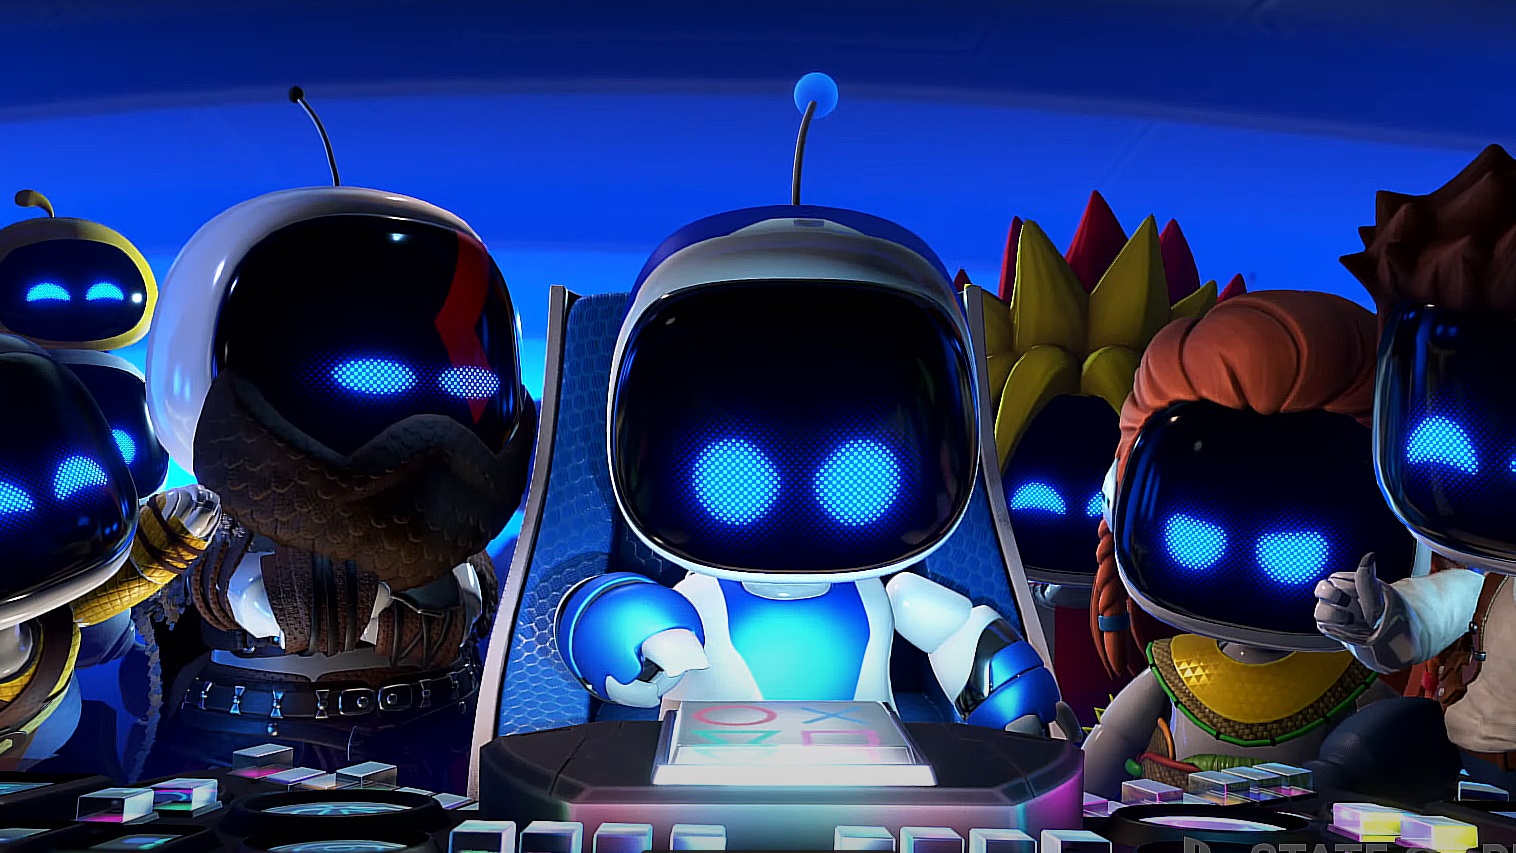 Astro Bot and its PlayStation character cameos